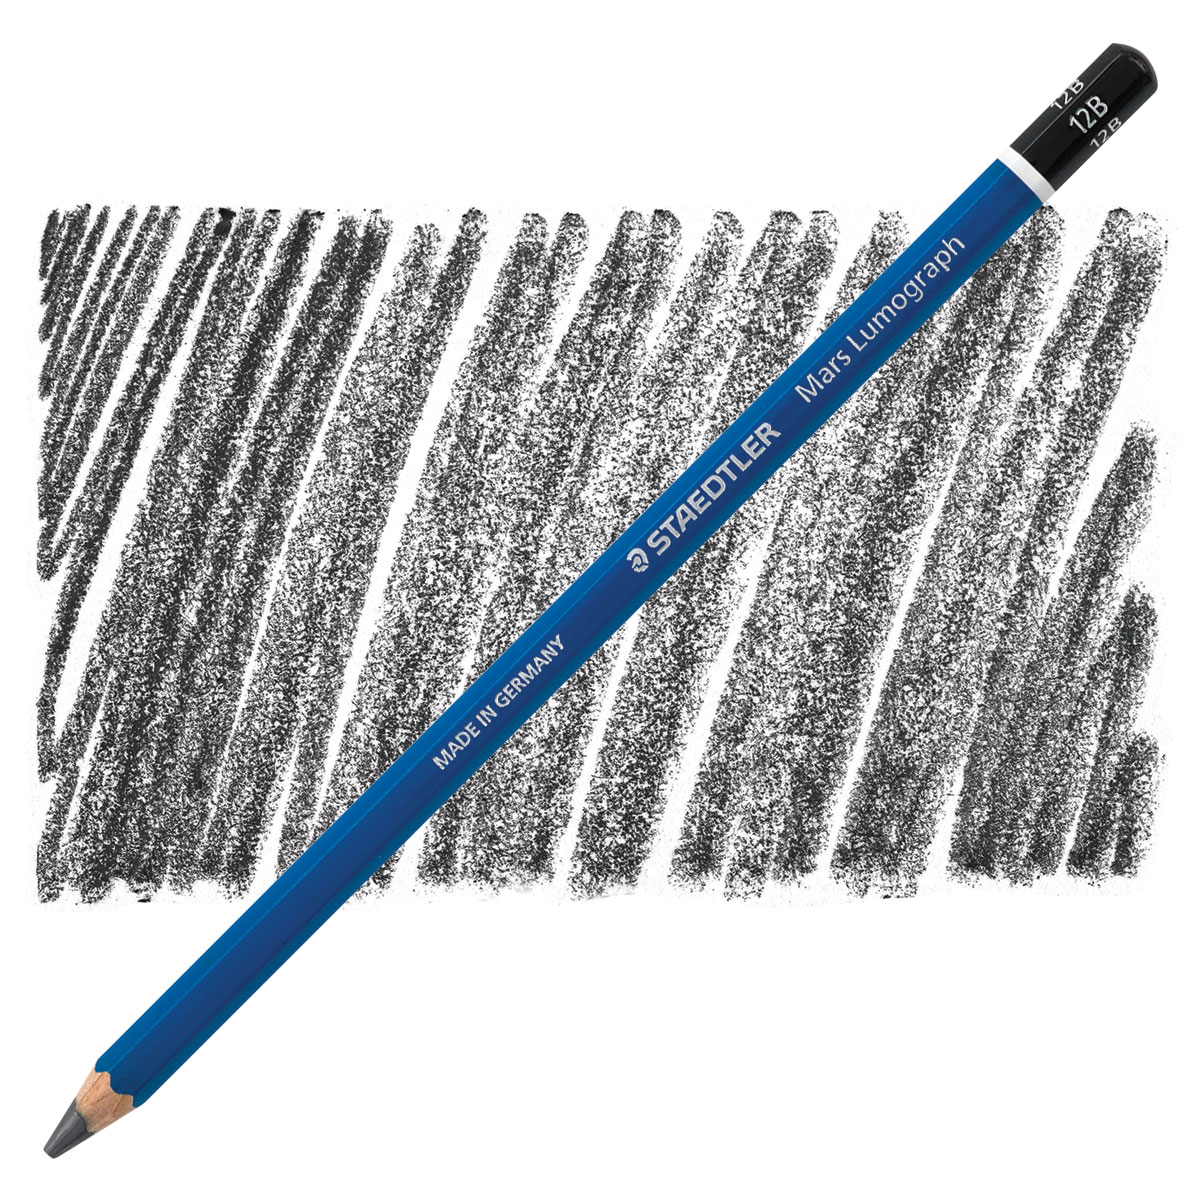 Staedtler® Mars® Lumograph® Drawing Pencils, Set Of 12